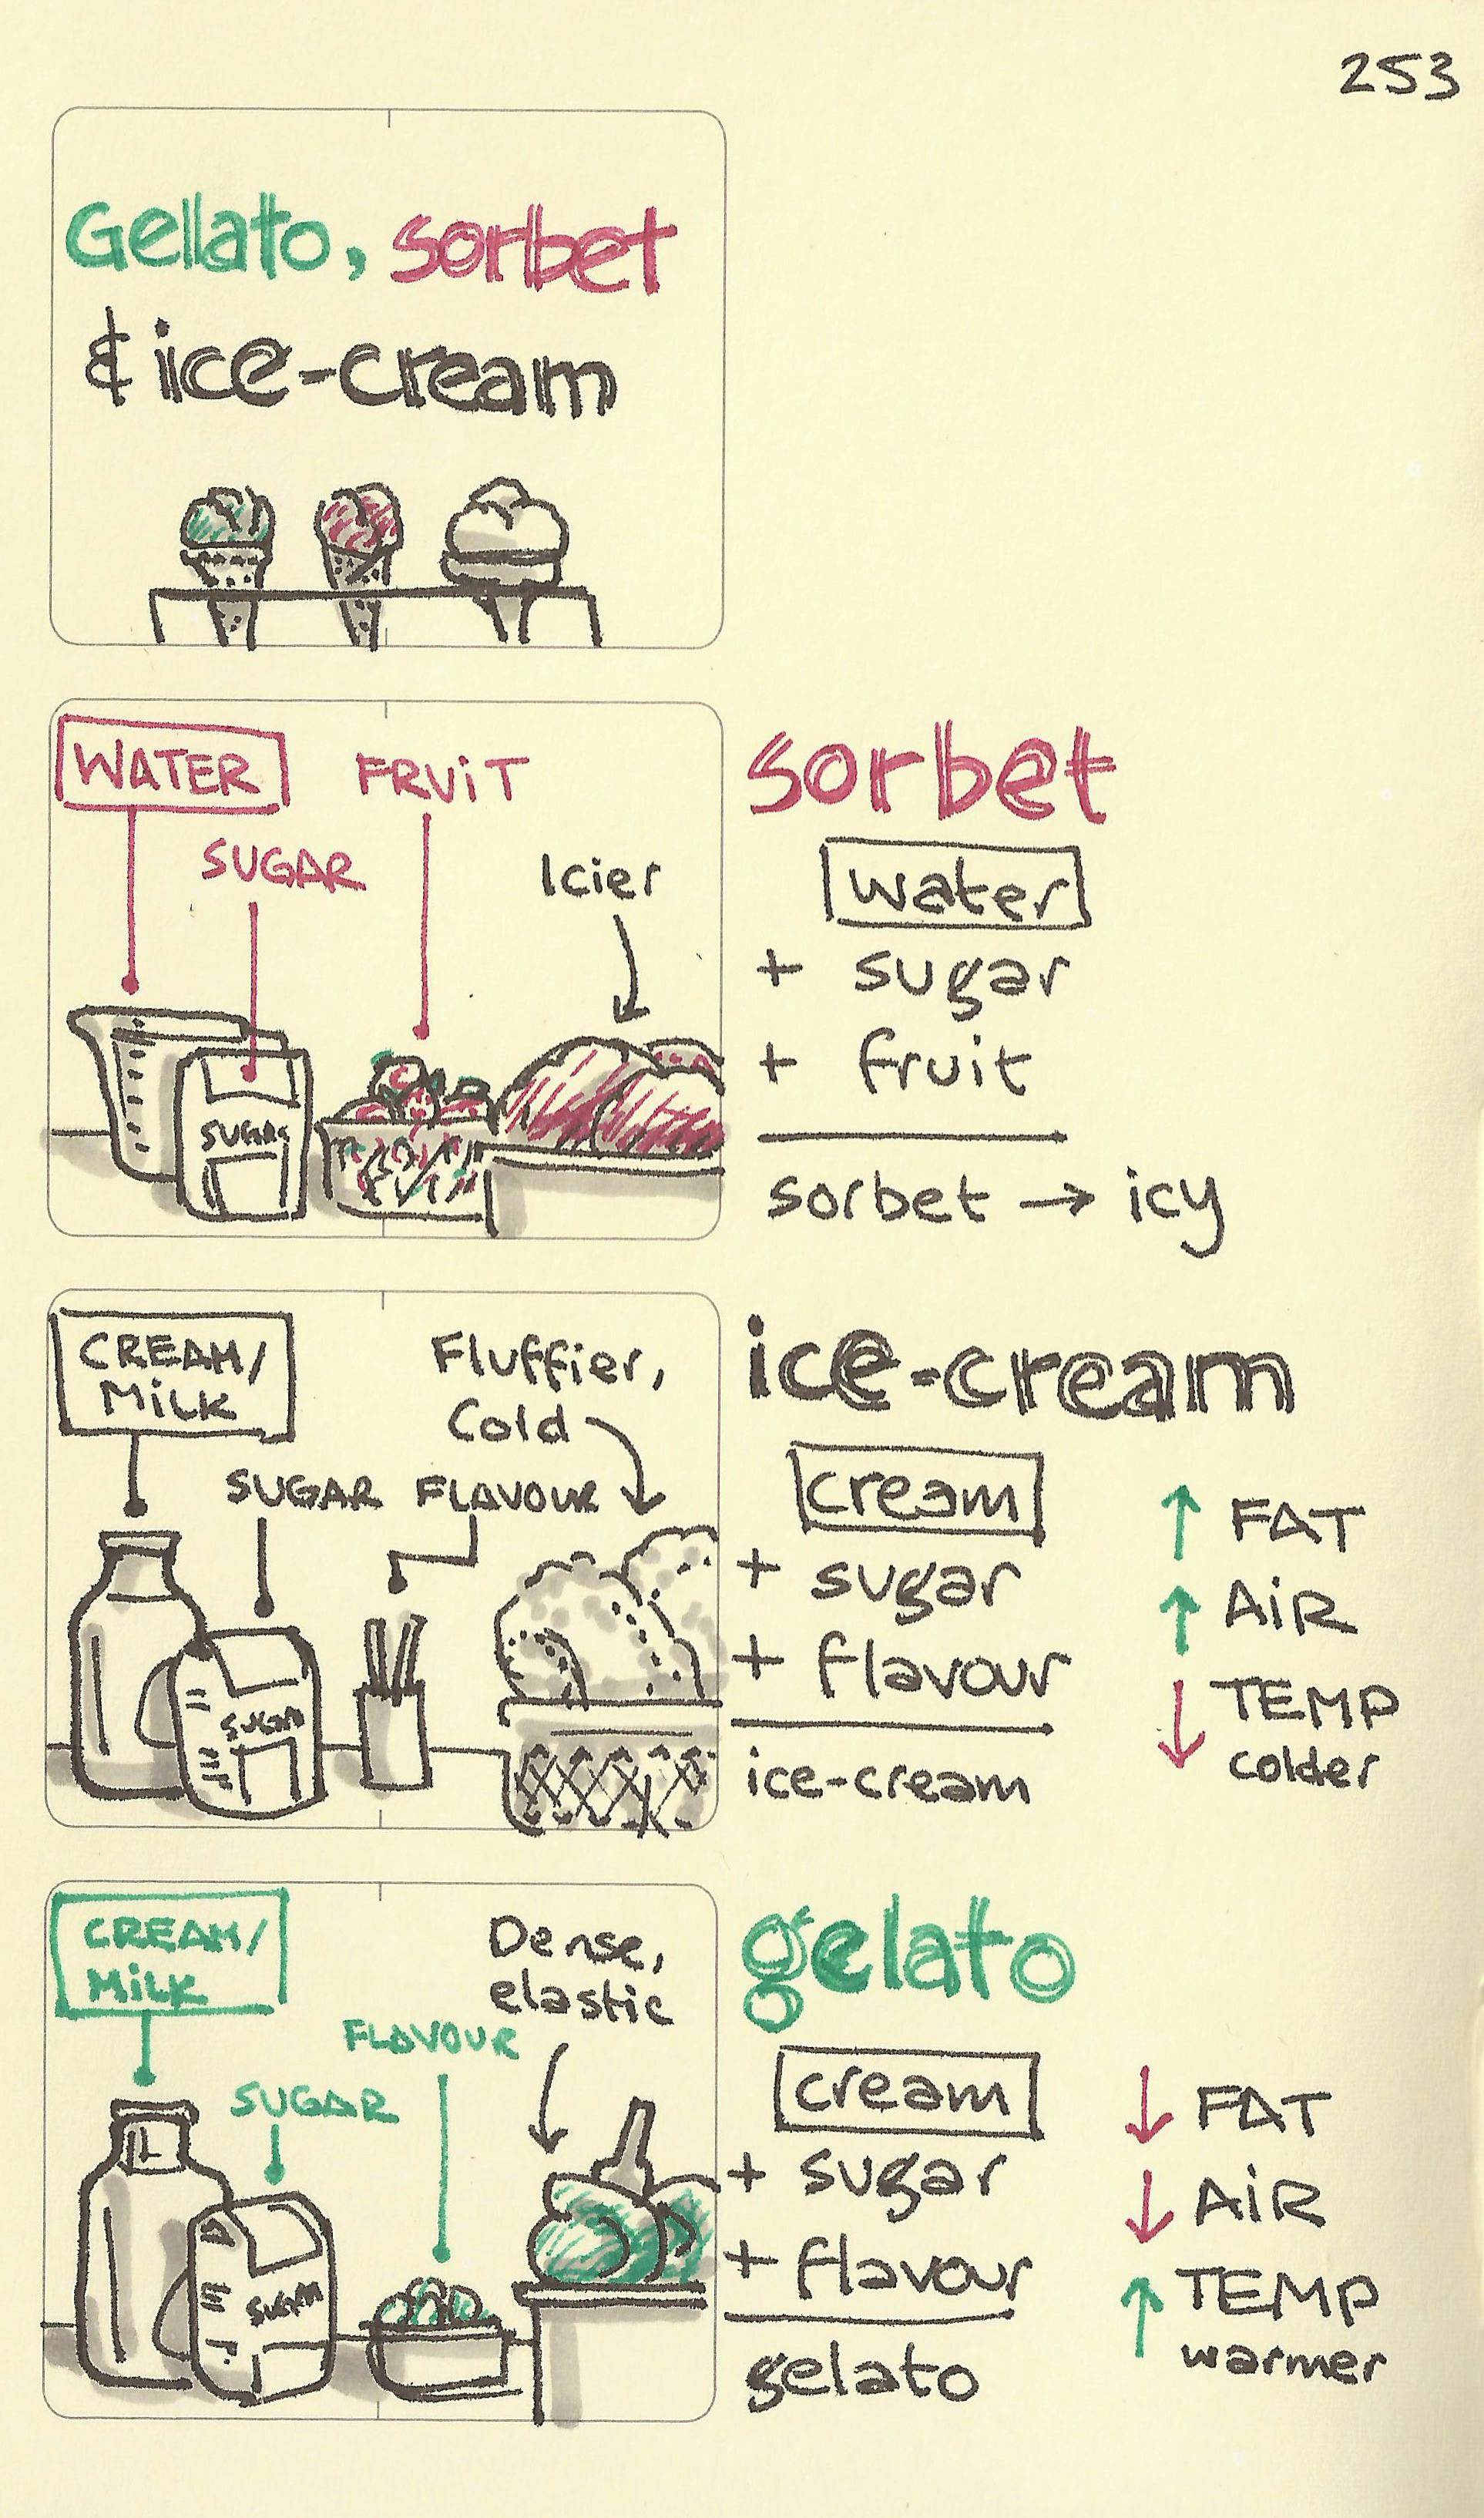 Gelato, sorbet and ice-cream - Sketchplanations